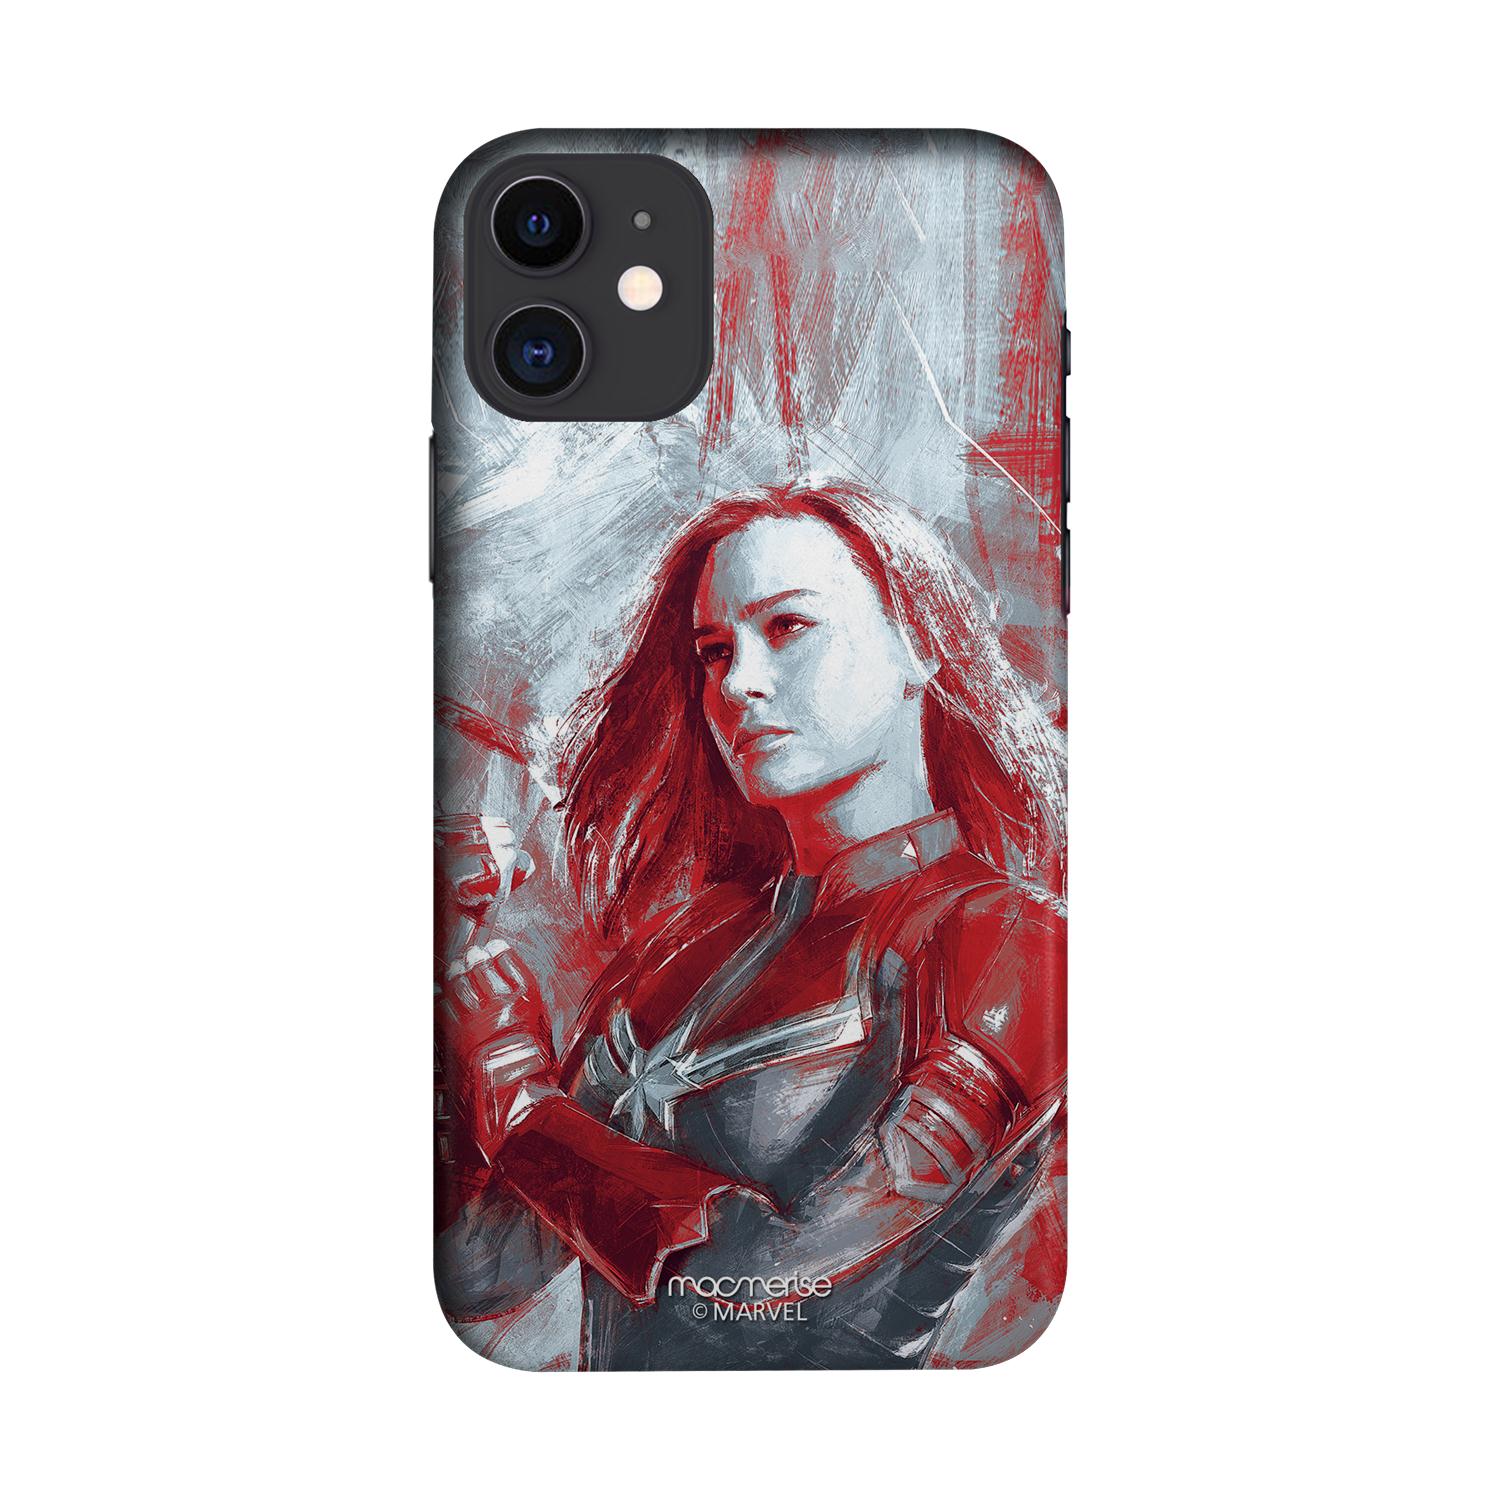 Buy Charcoal Art Capt Marvel - Sleek Phone Case for iPhone 11 Online